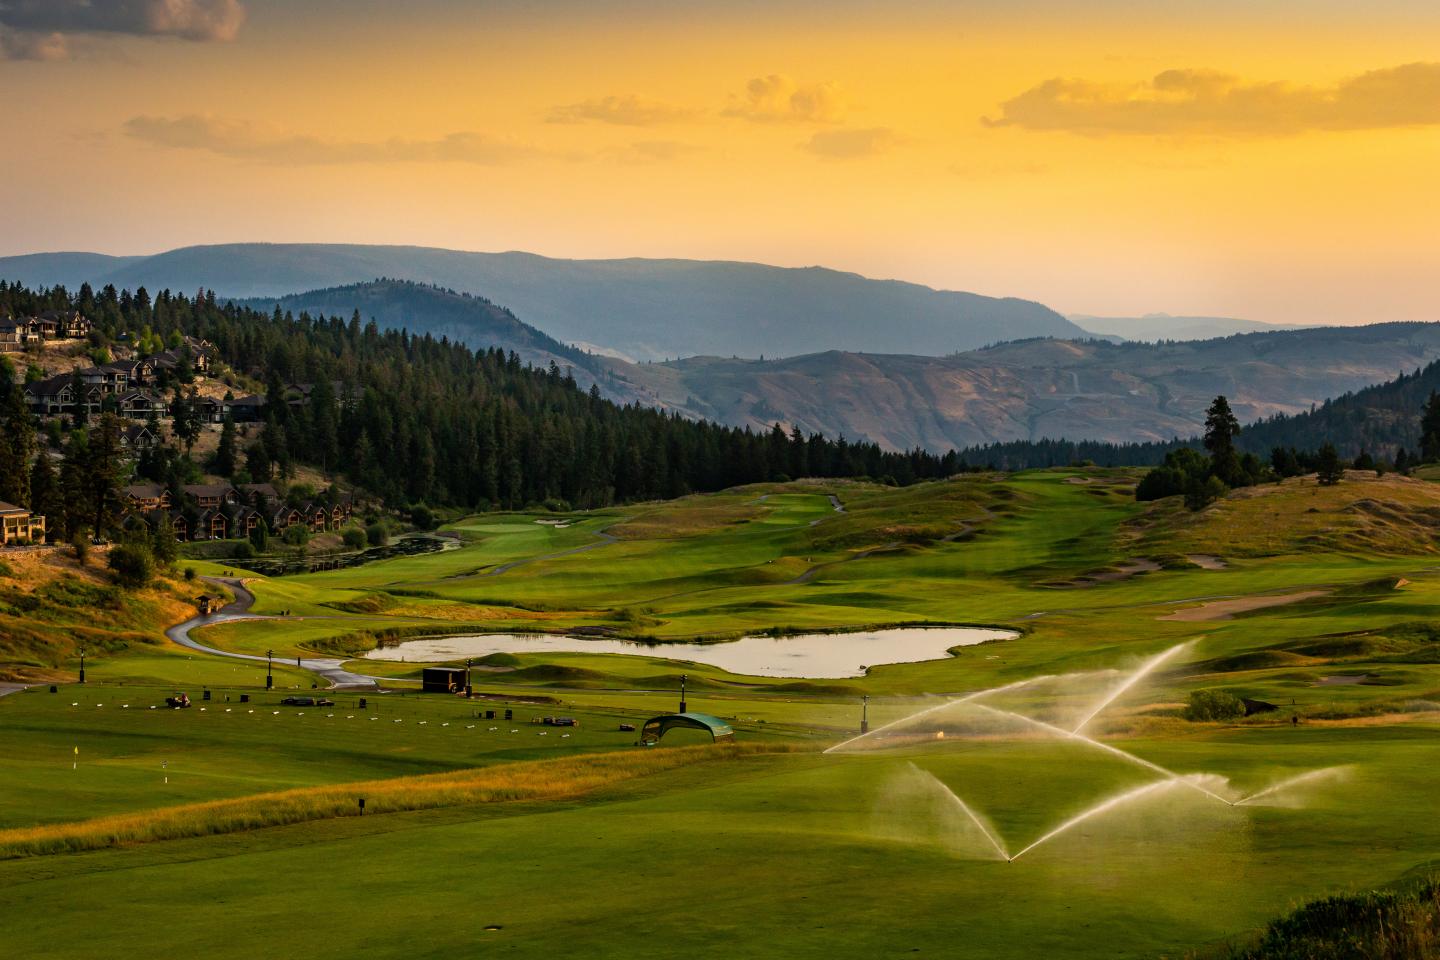 golf course at dusk